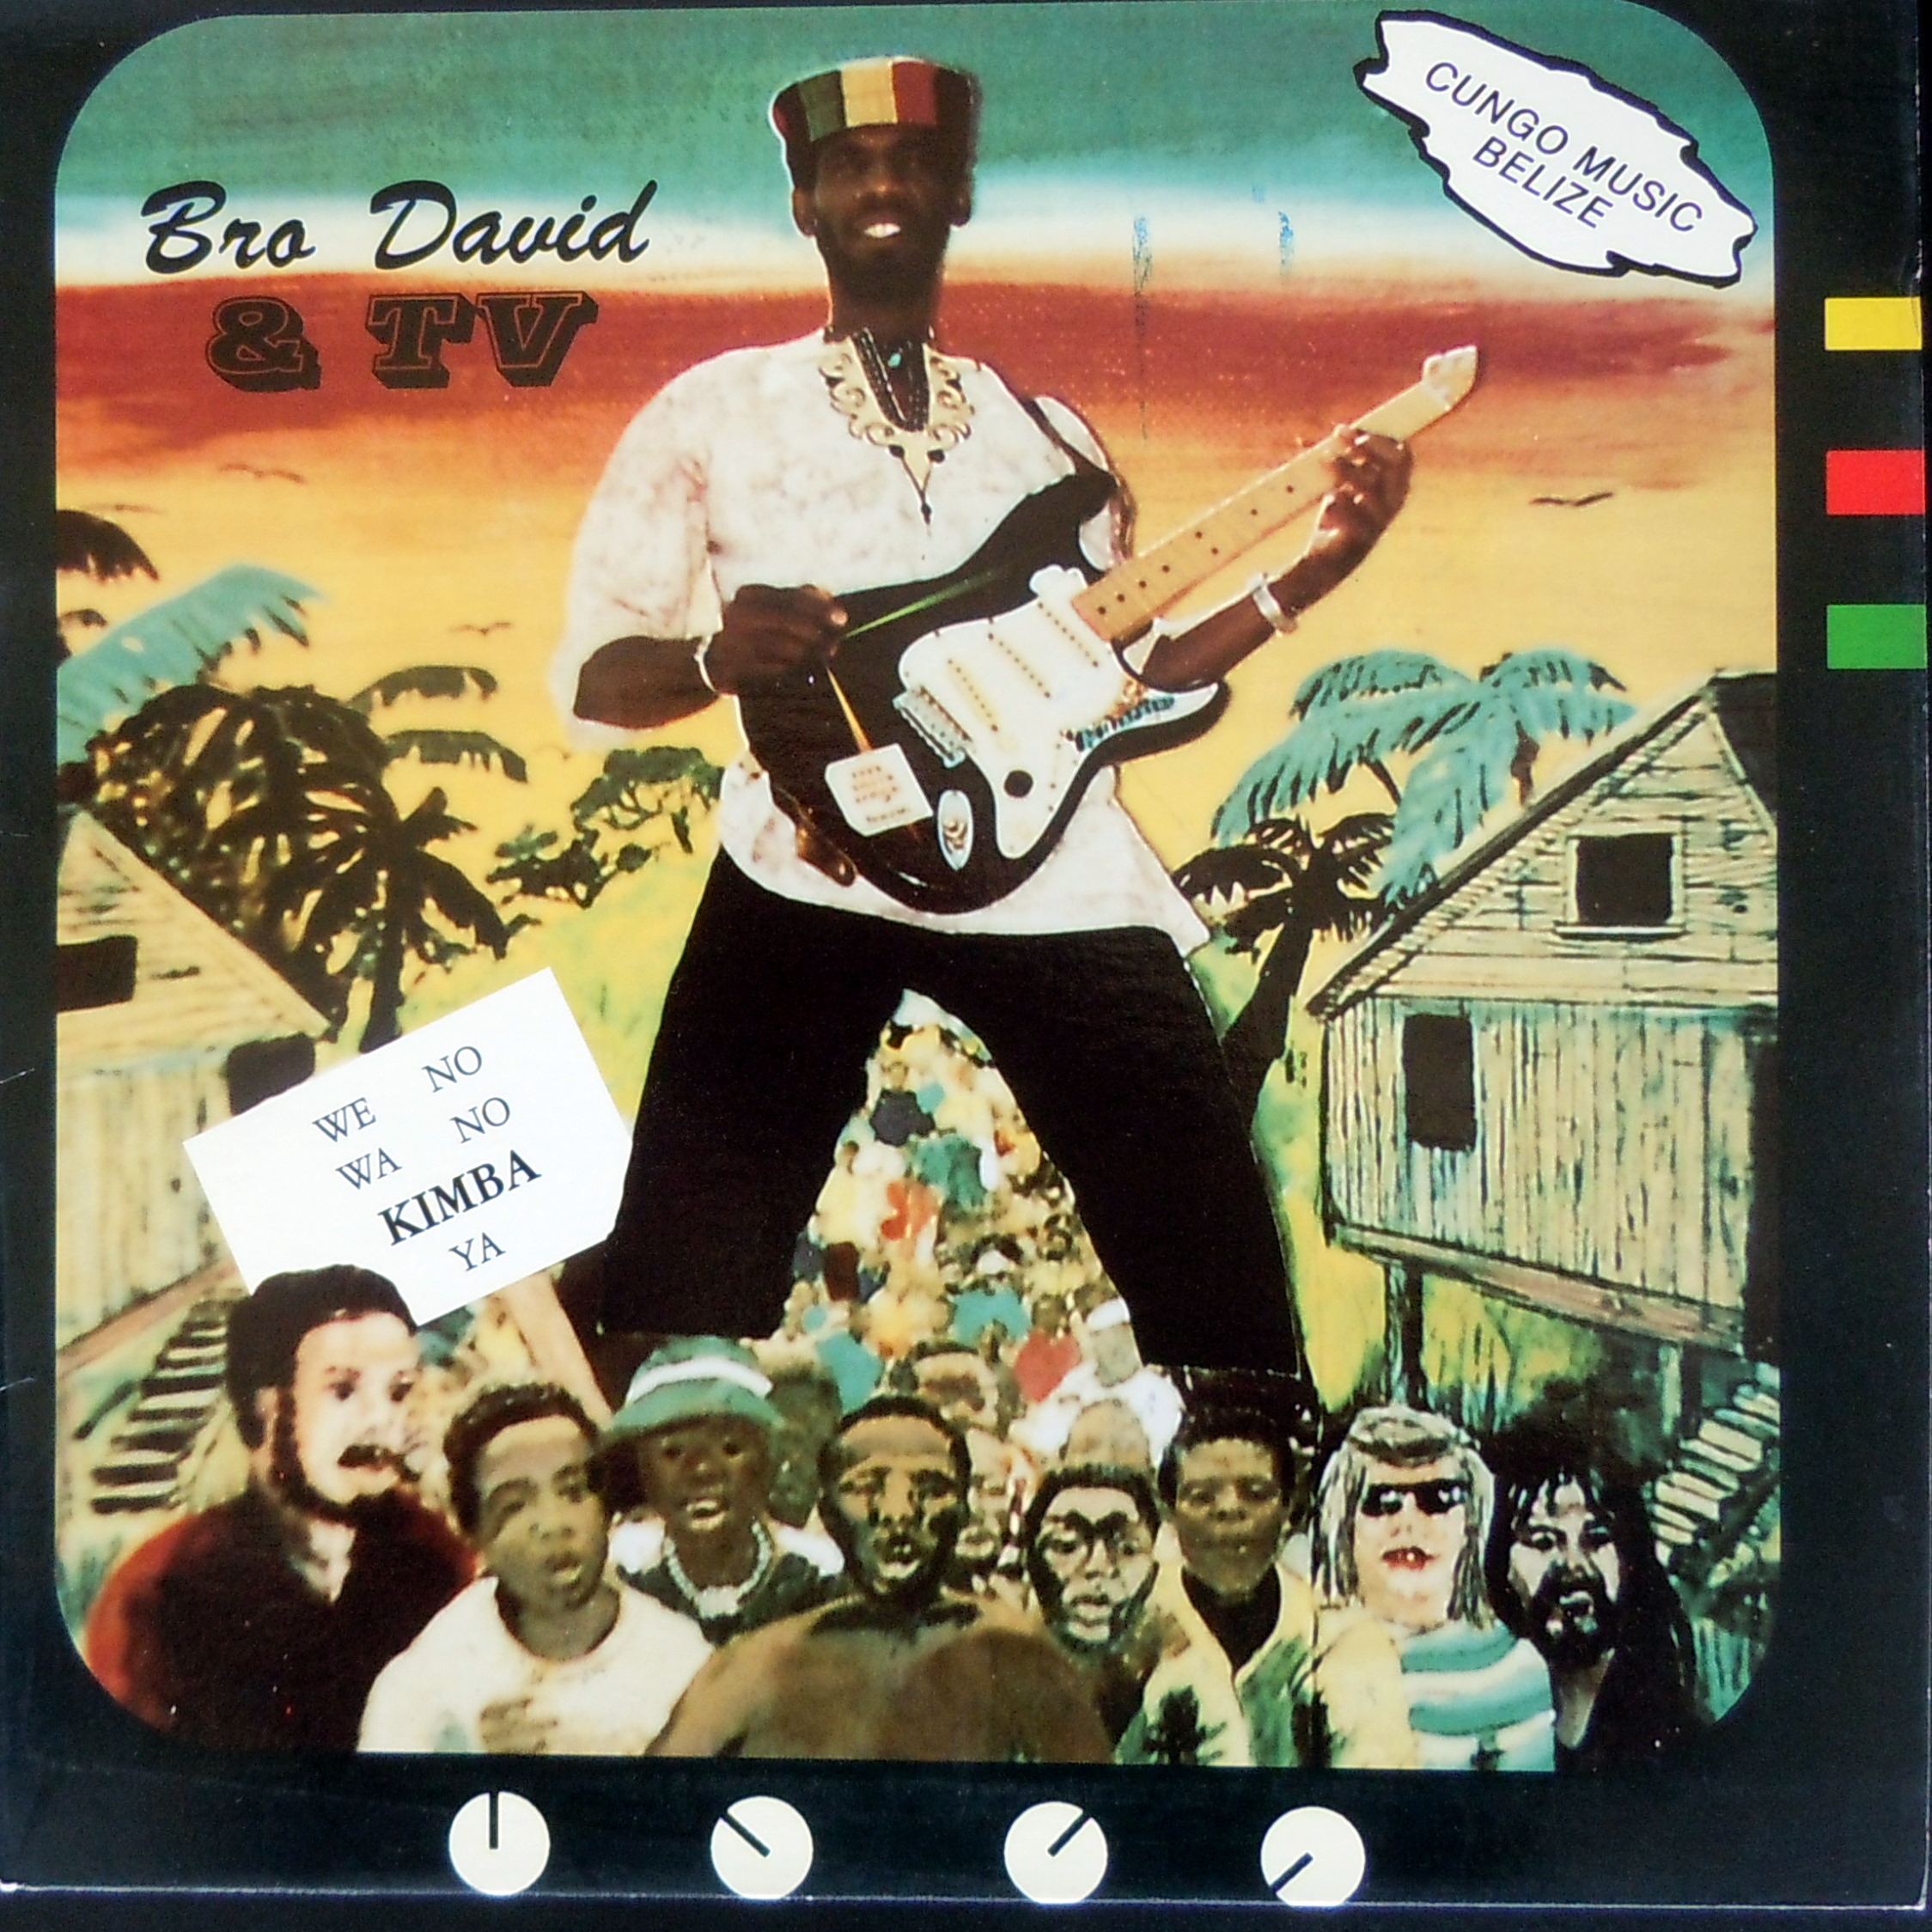 Bredda David-No Kimba Ya (Arranged by: Bredda David Obi & Junie Crawford, Produced by: Kungo Productions)